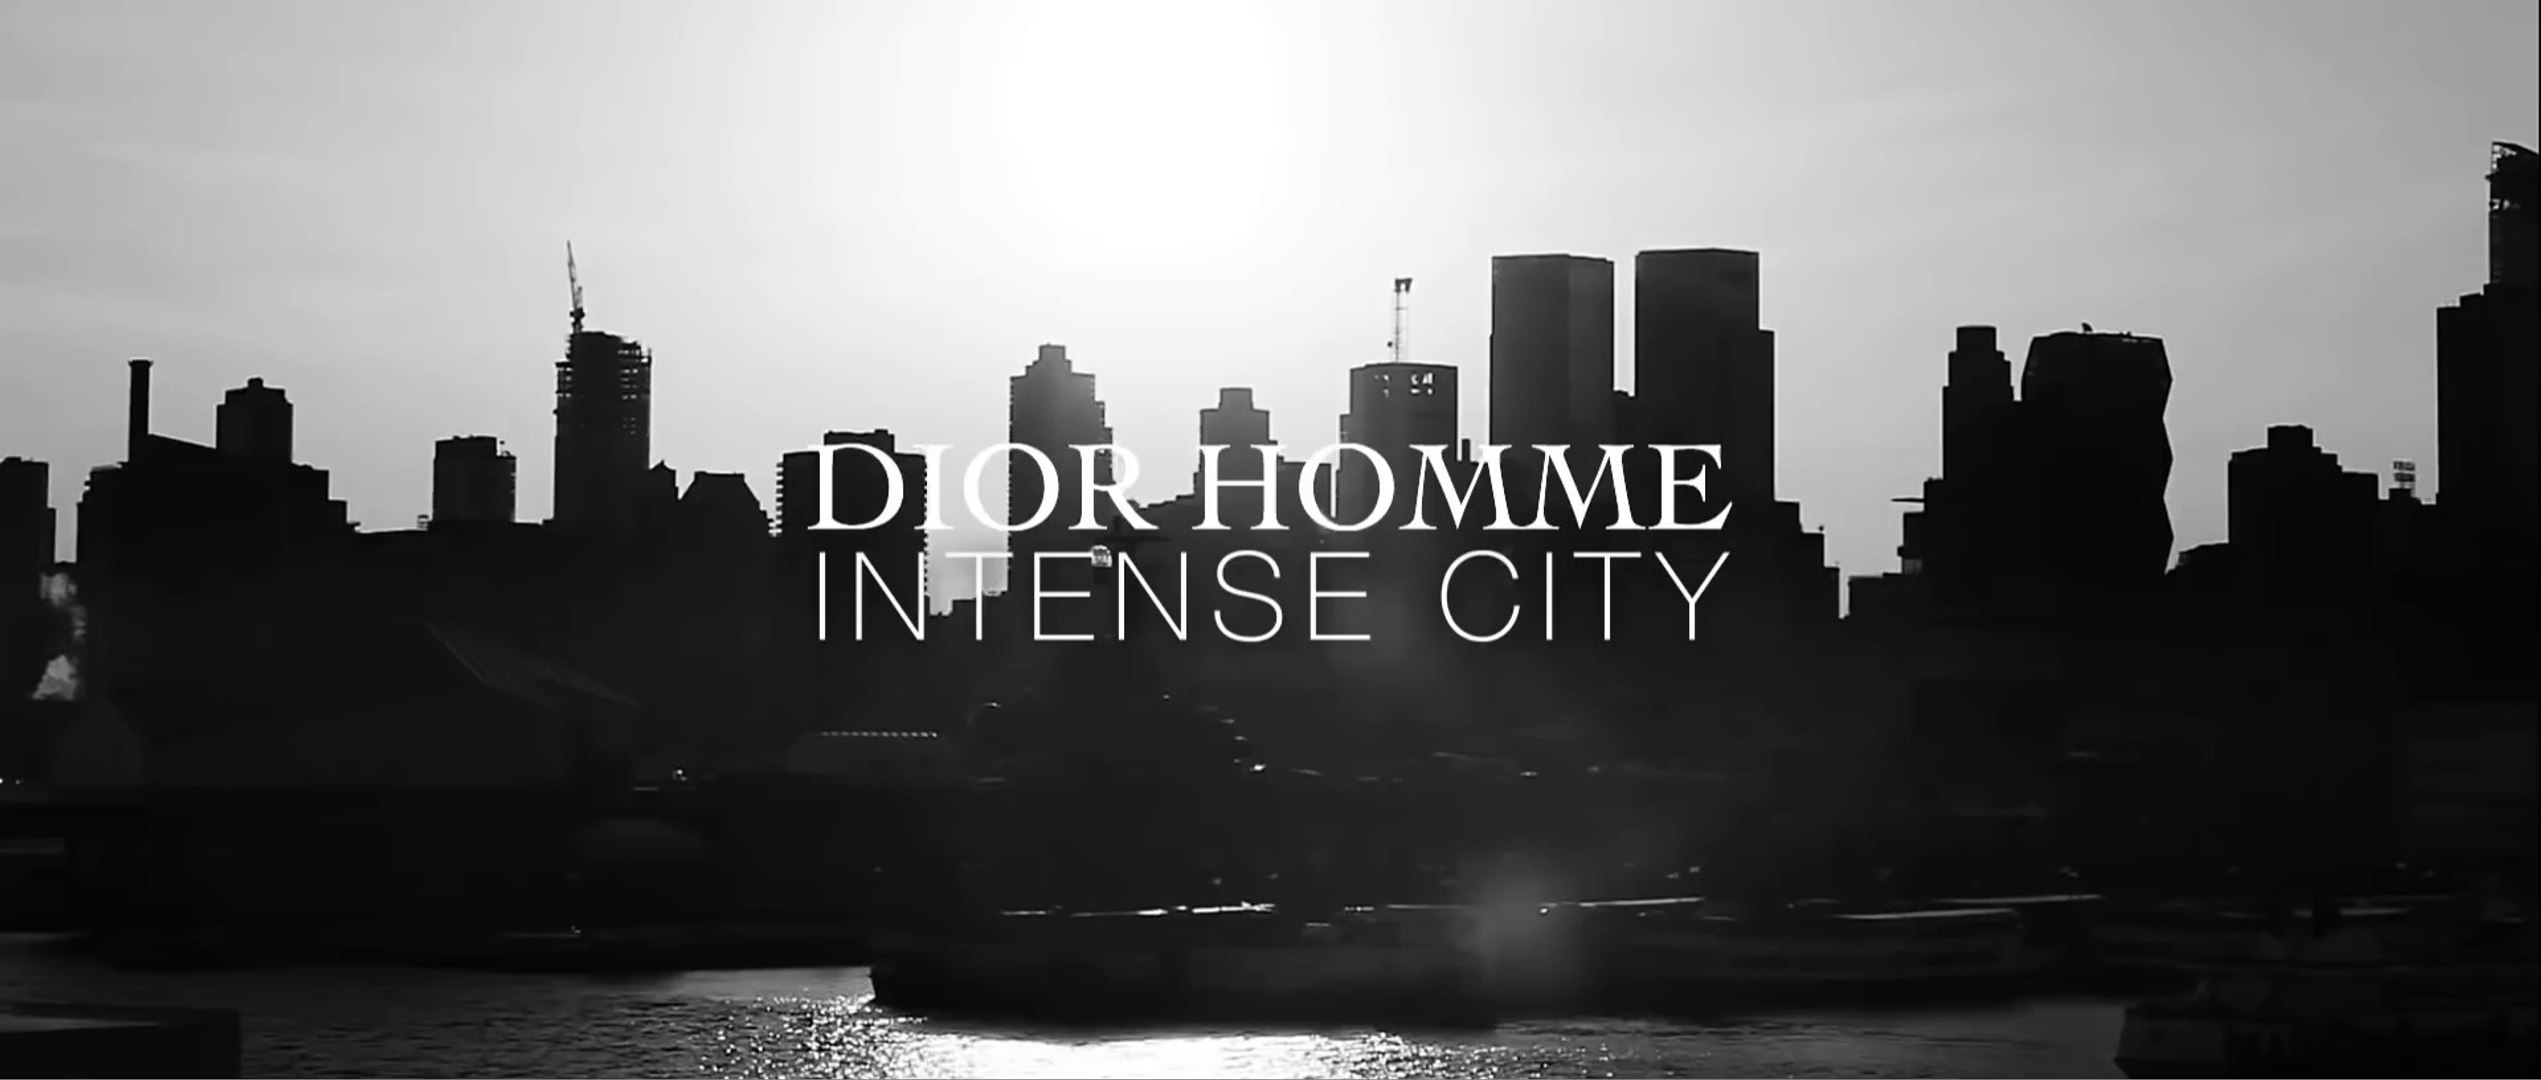 Pub Dior : Homme Intense City avec Robert Pattinson [HD] - Vidéo Dailymotion